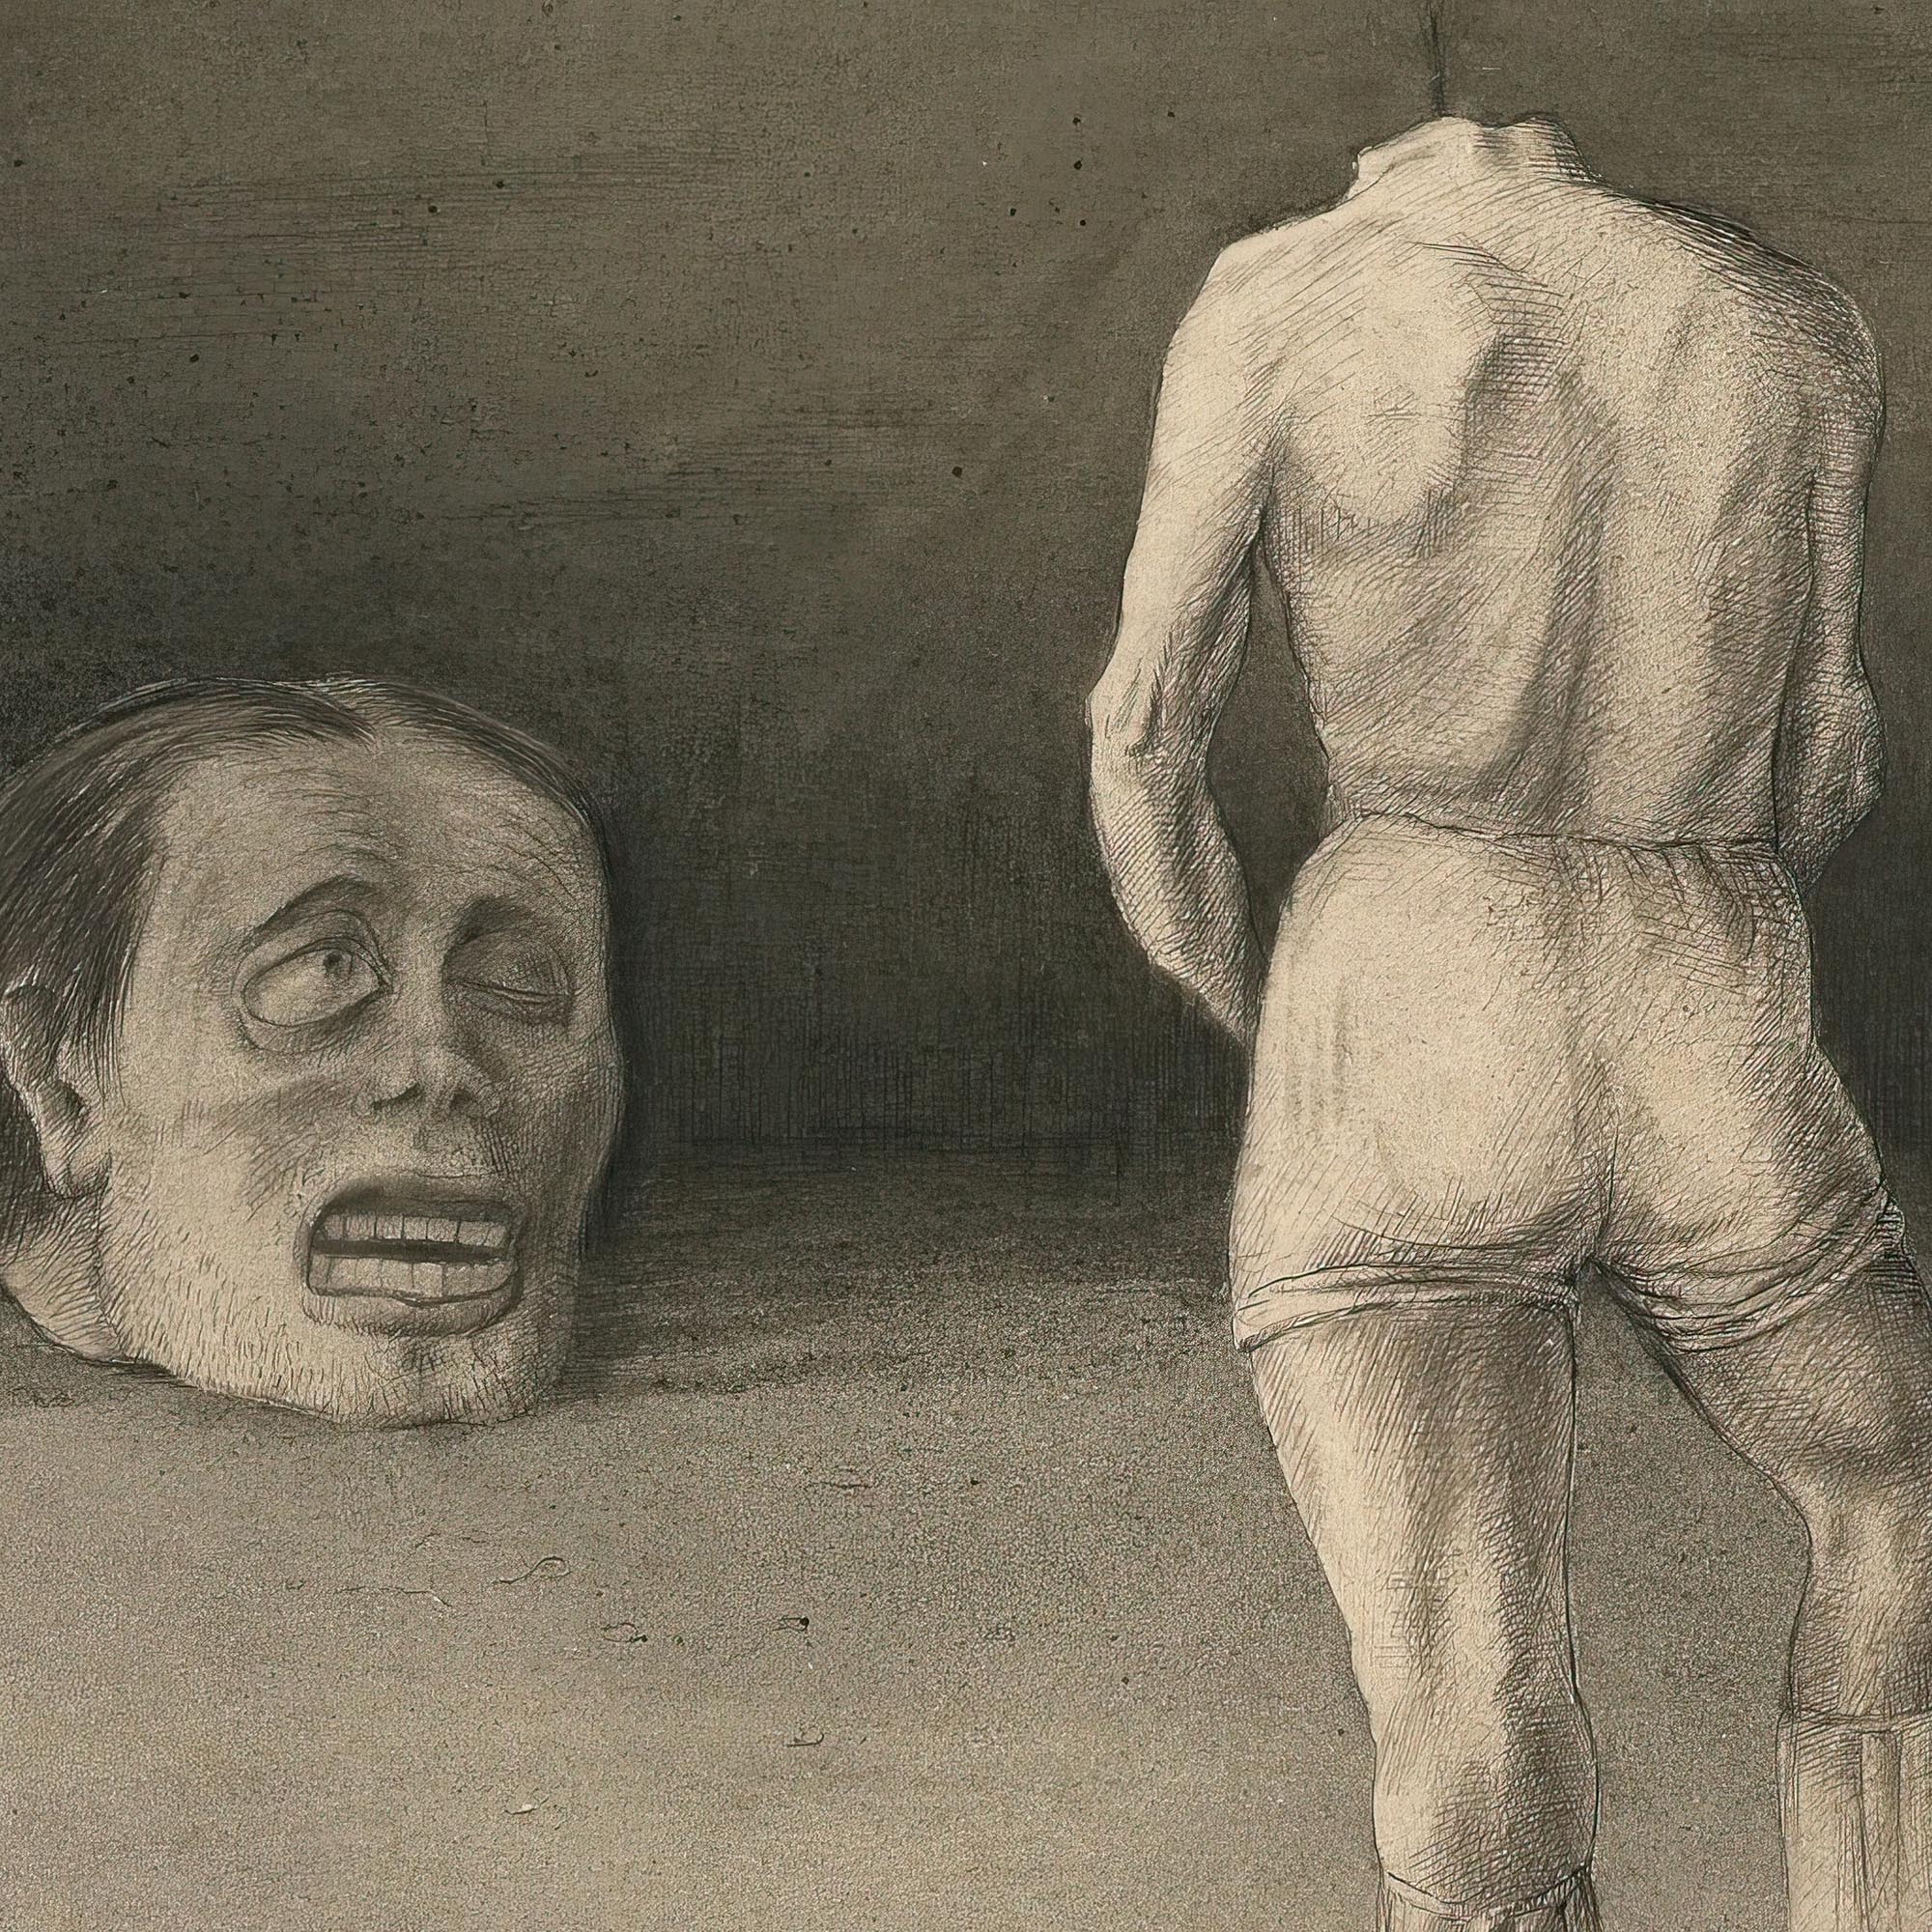 Fine art 6"x6" Alfred Kubin: Self Reflection, Mysterious Symbolist Art | Surreal Gothic Expressionist Fantasy Art | Strange Macabre Vintage Giclée Fine Art Print